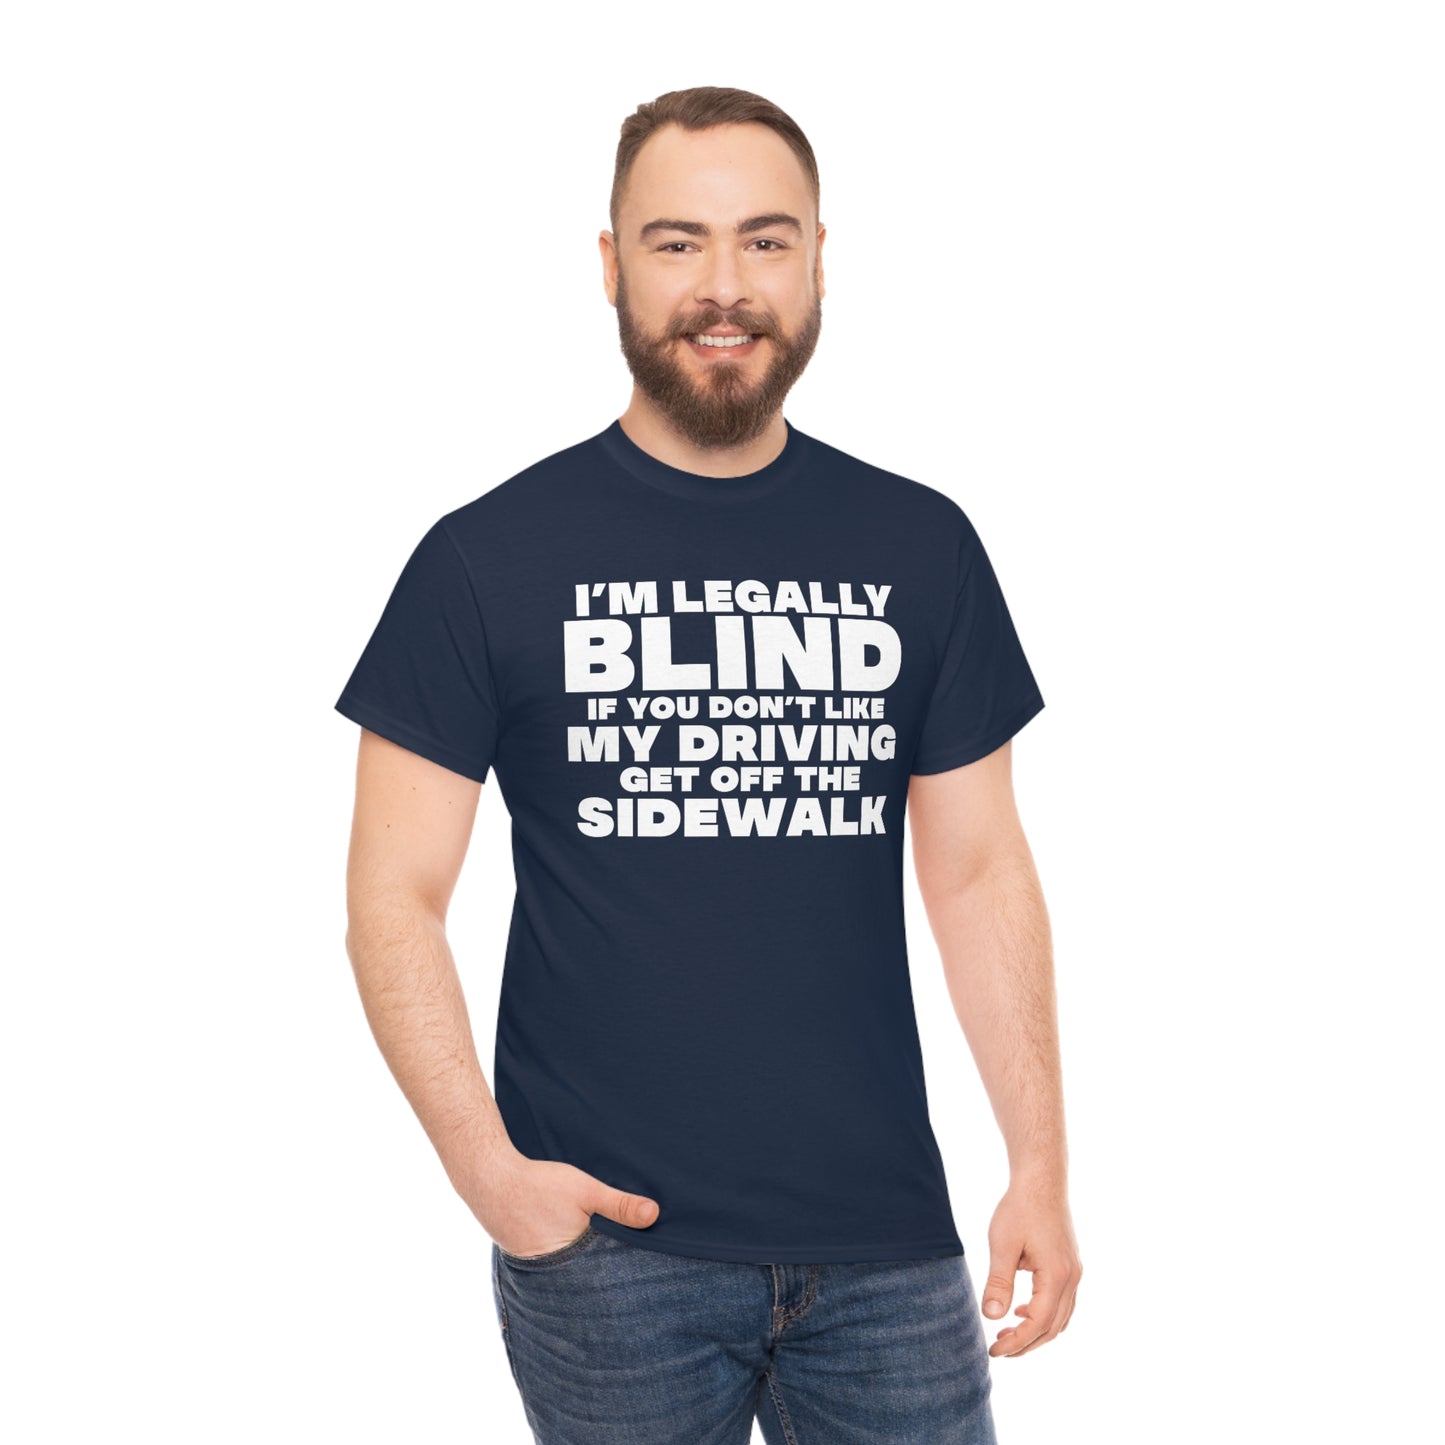 I'M LEGALLY BLIND T-SHIRT